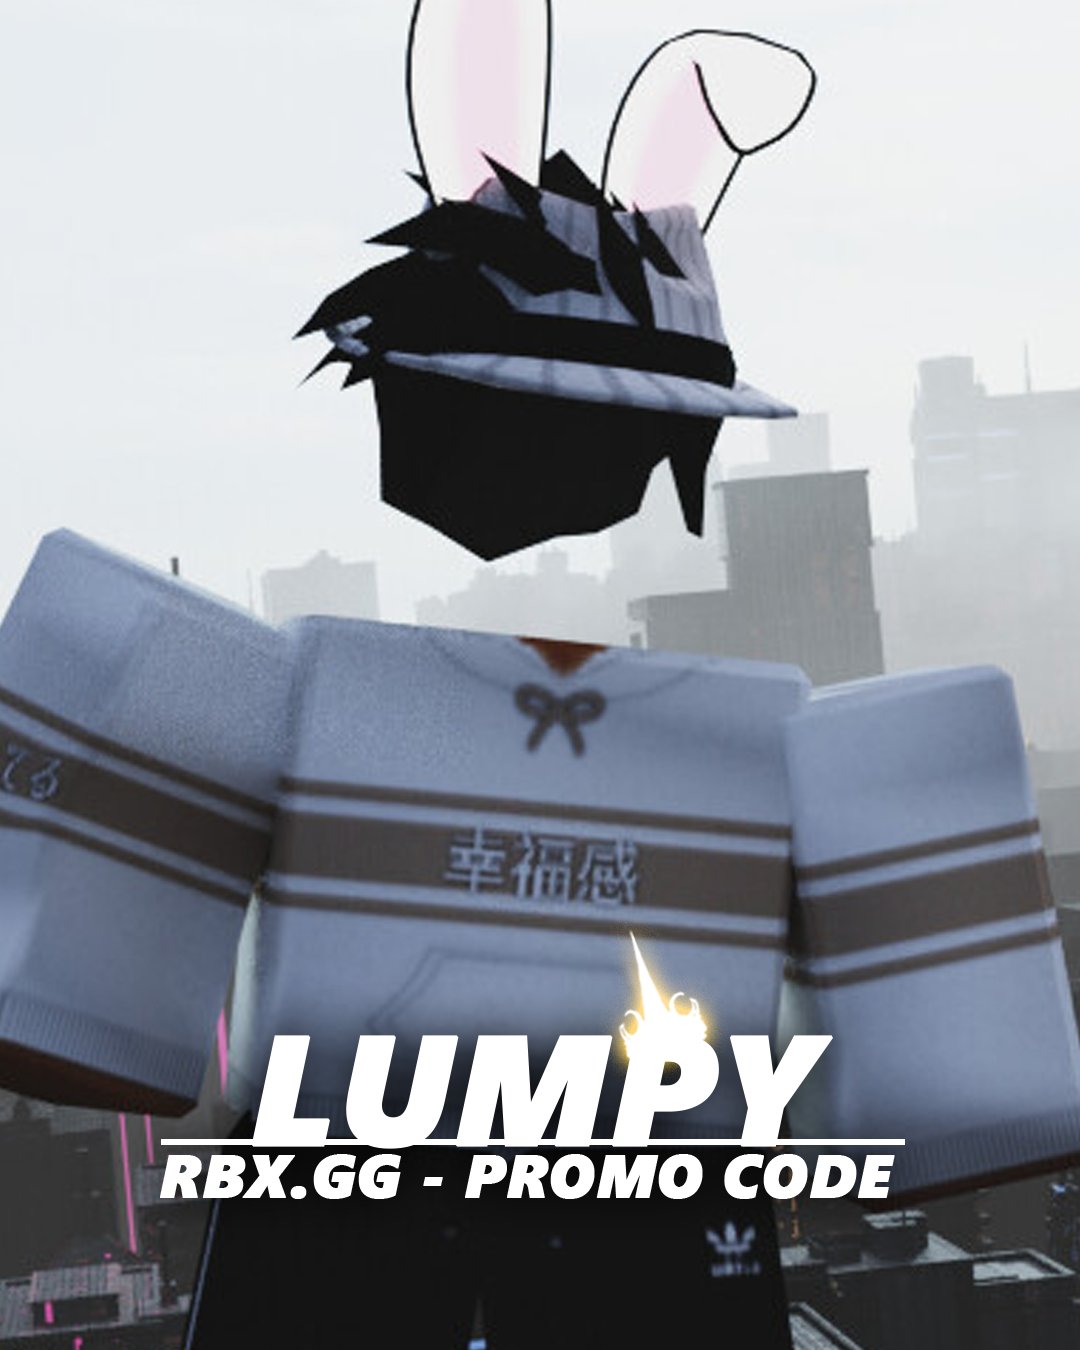 RBXTO.GG Promo Codes (May 2023) - Gamer Tweak